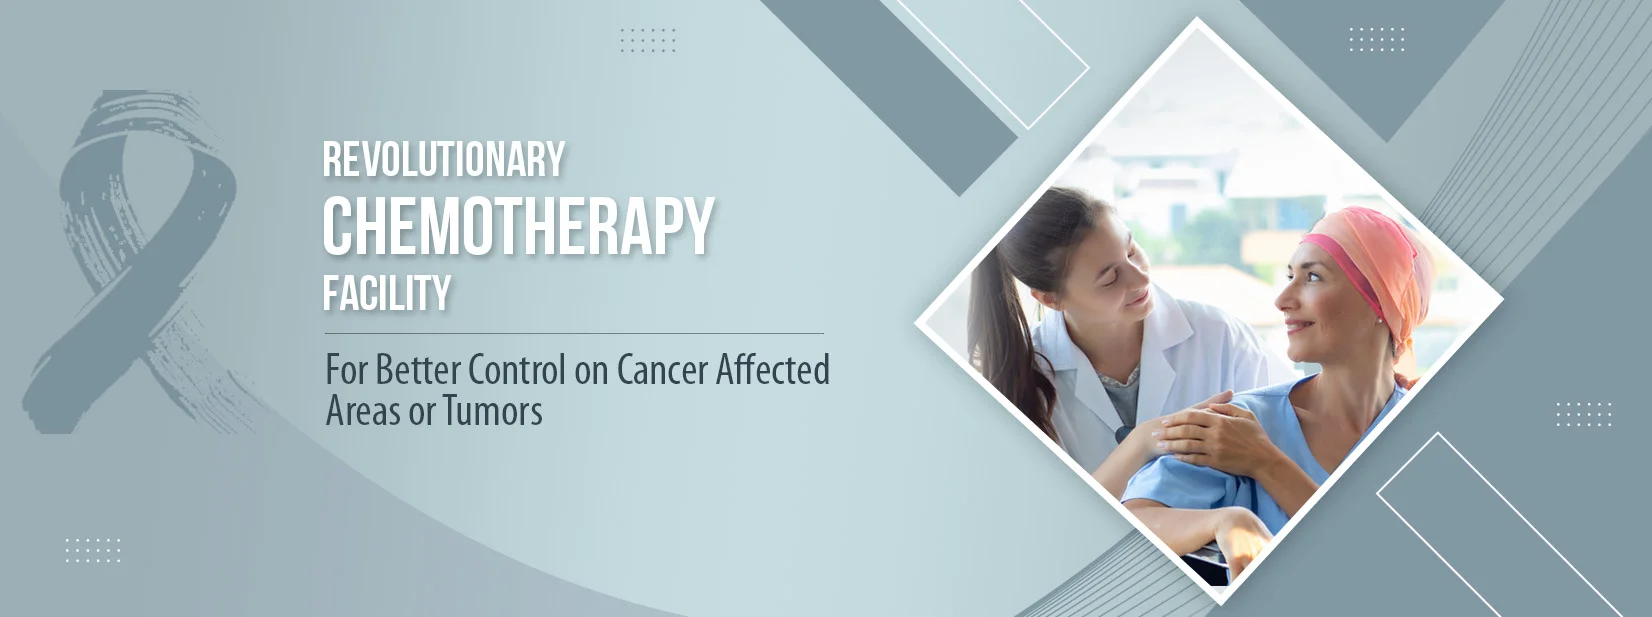 Chemotherapy Banner